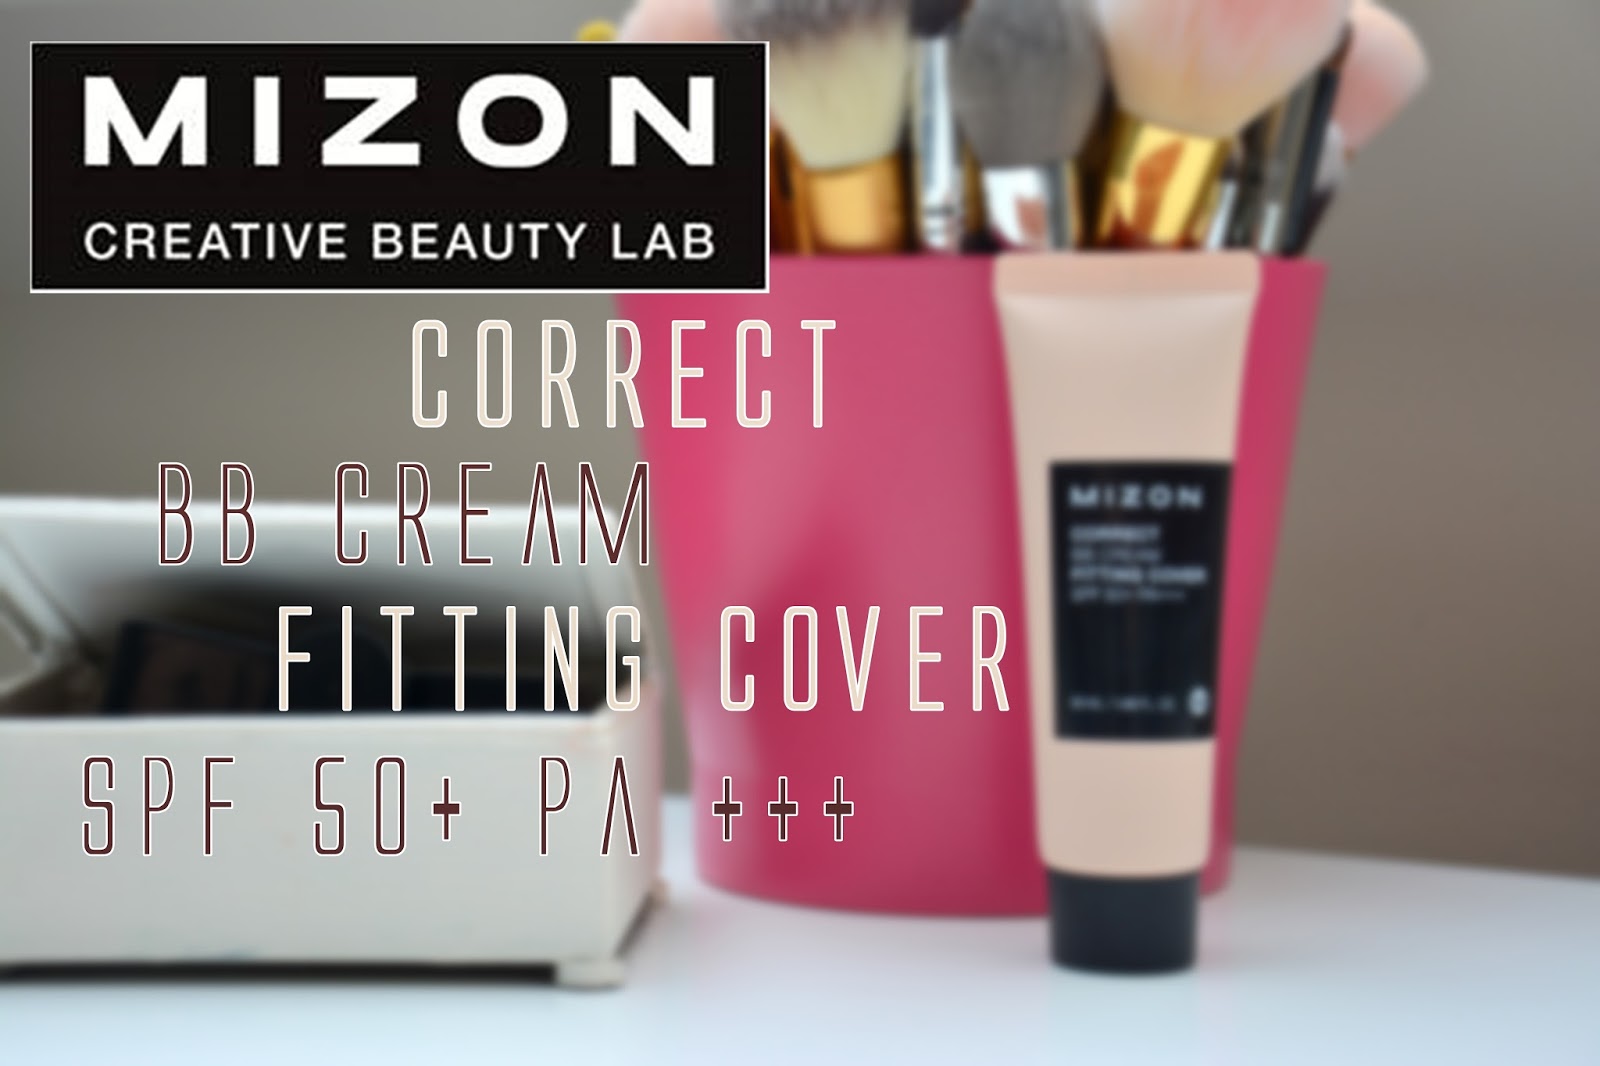 IMAGINE DAY | Sara Sycz: mizon correct bb cream